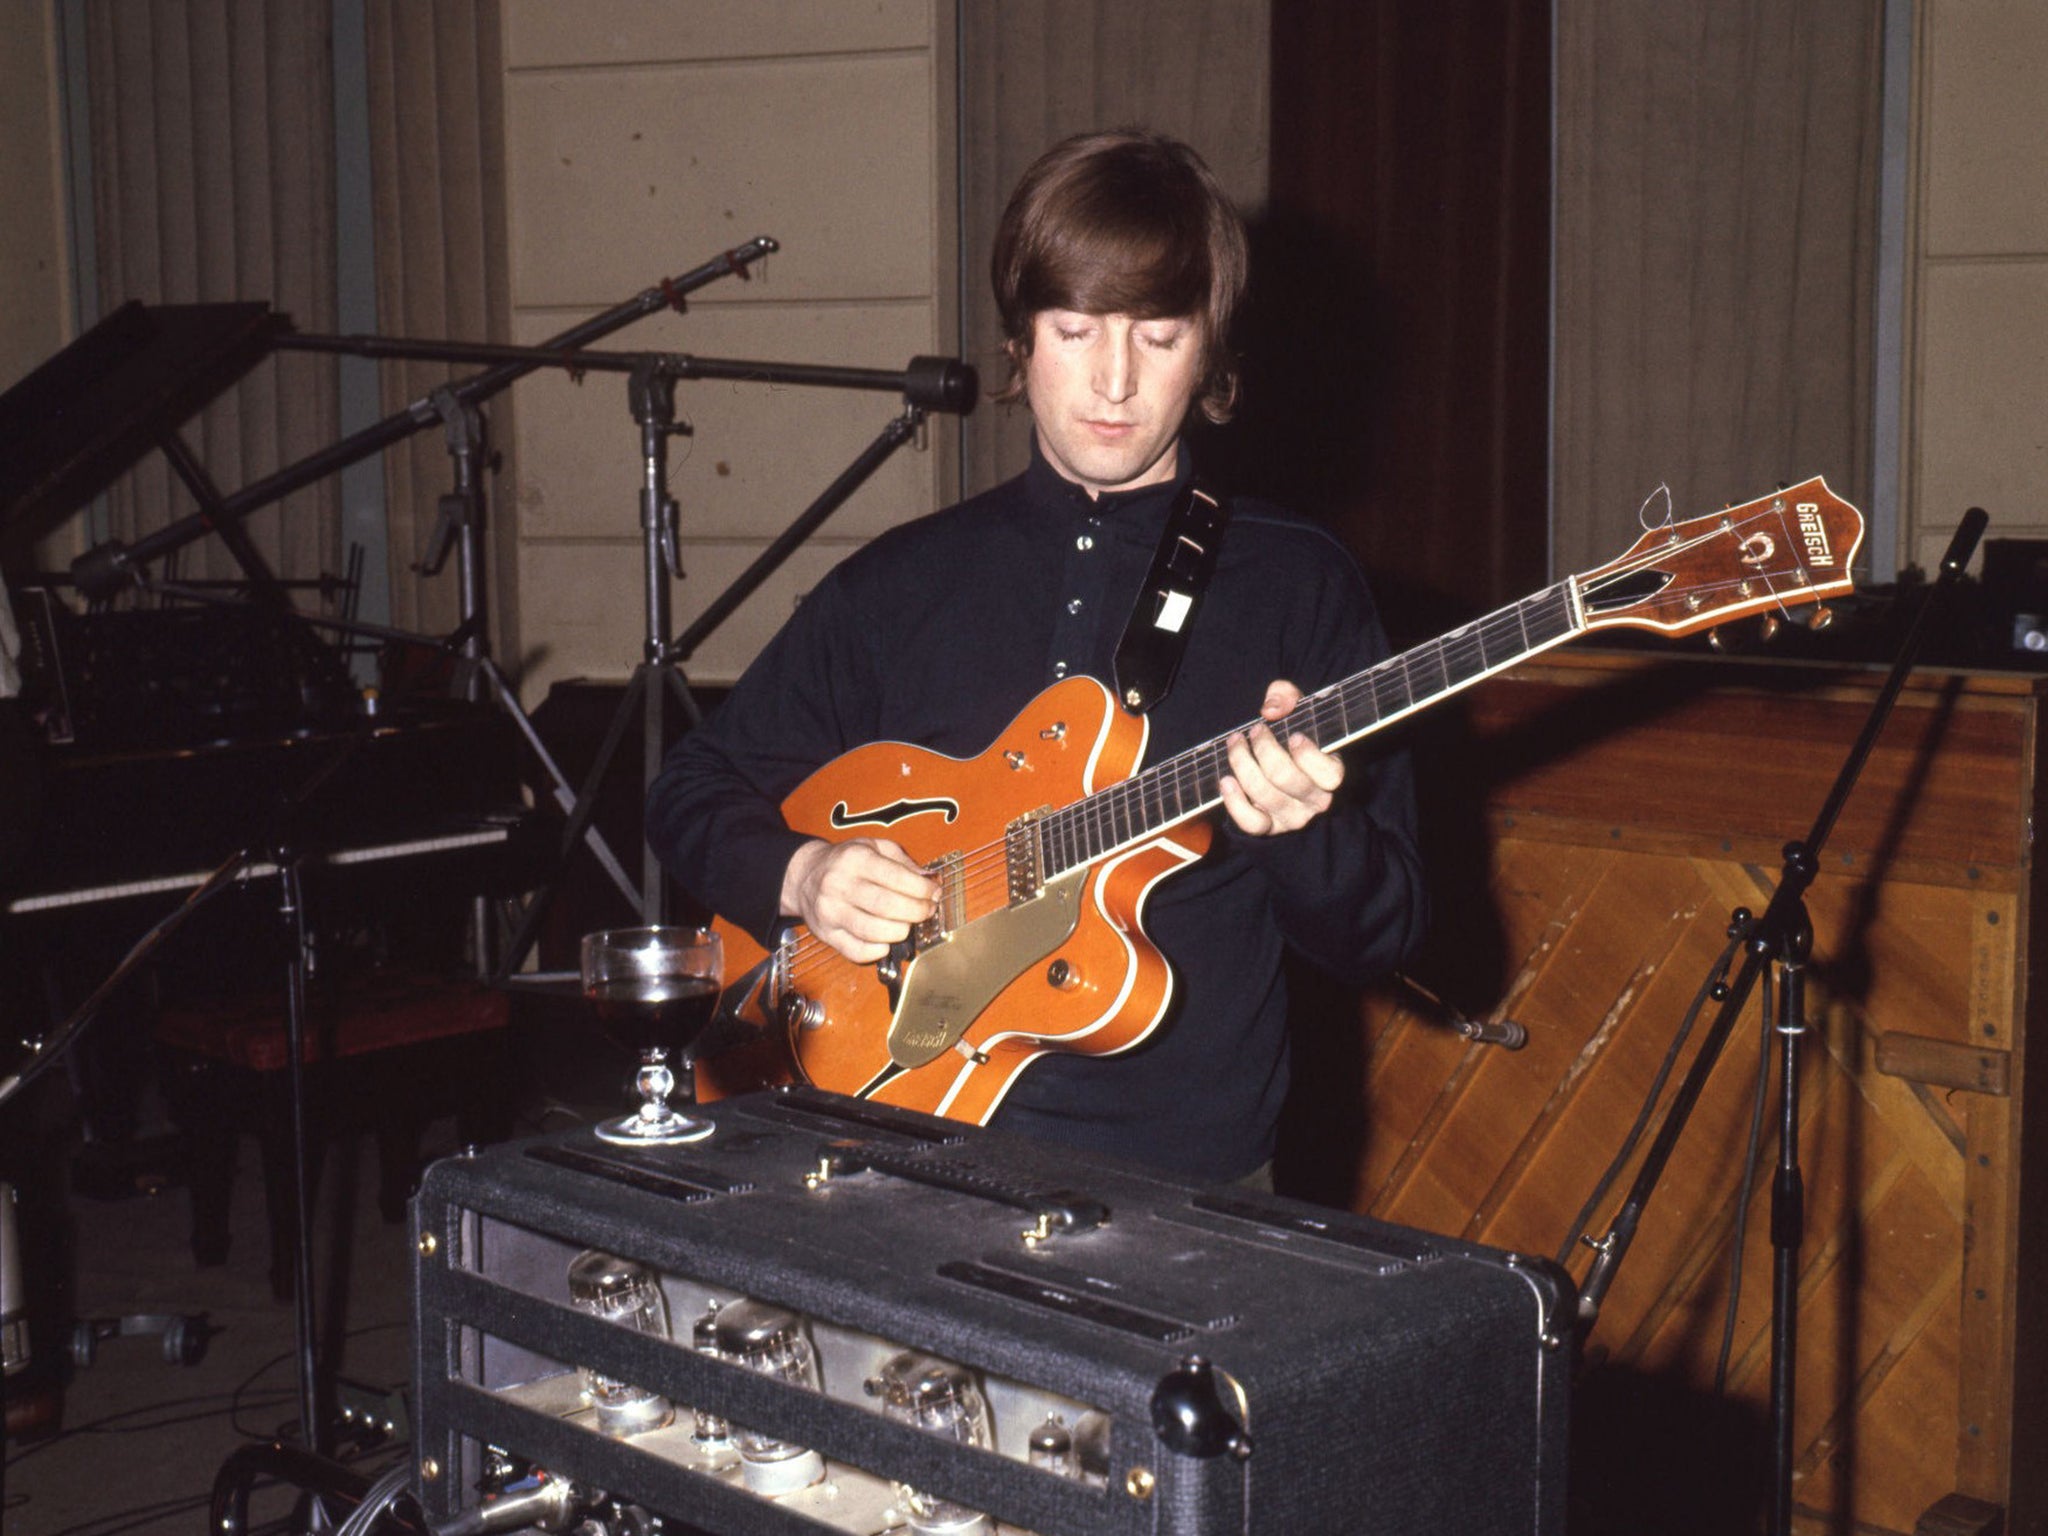 John Lennon with the Gretsch 6120 guitar